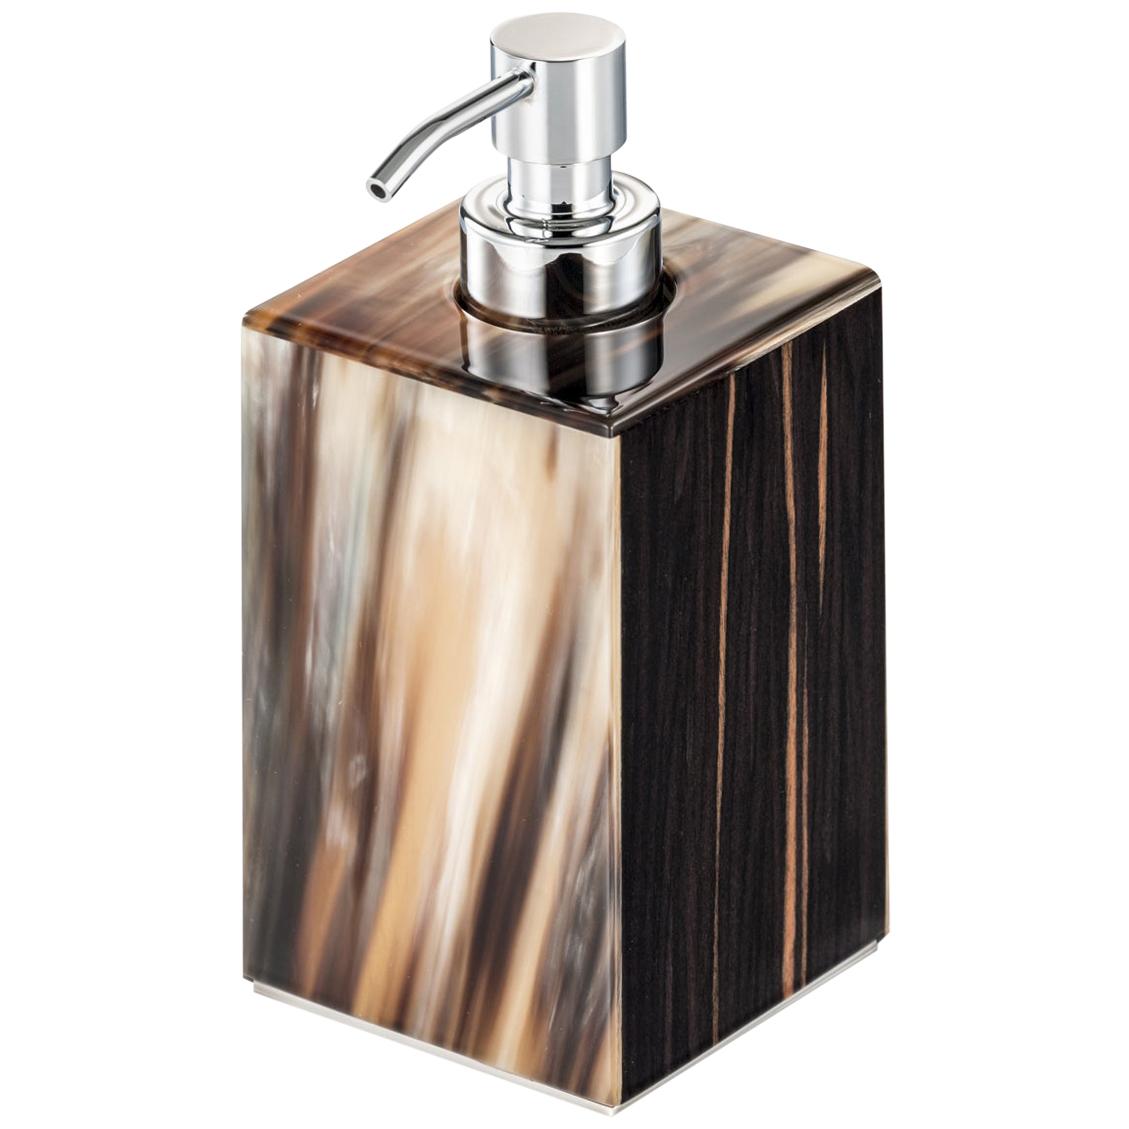 Iris Soap Dispenser in Glossy Ebony with Corno Italiano Inlays Mod. 4771 For Sale